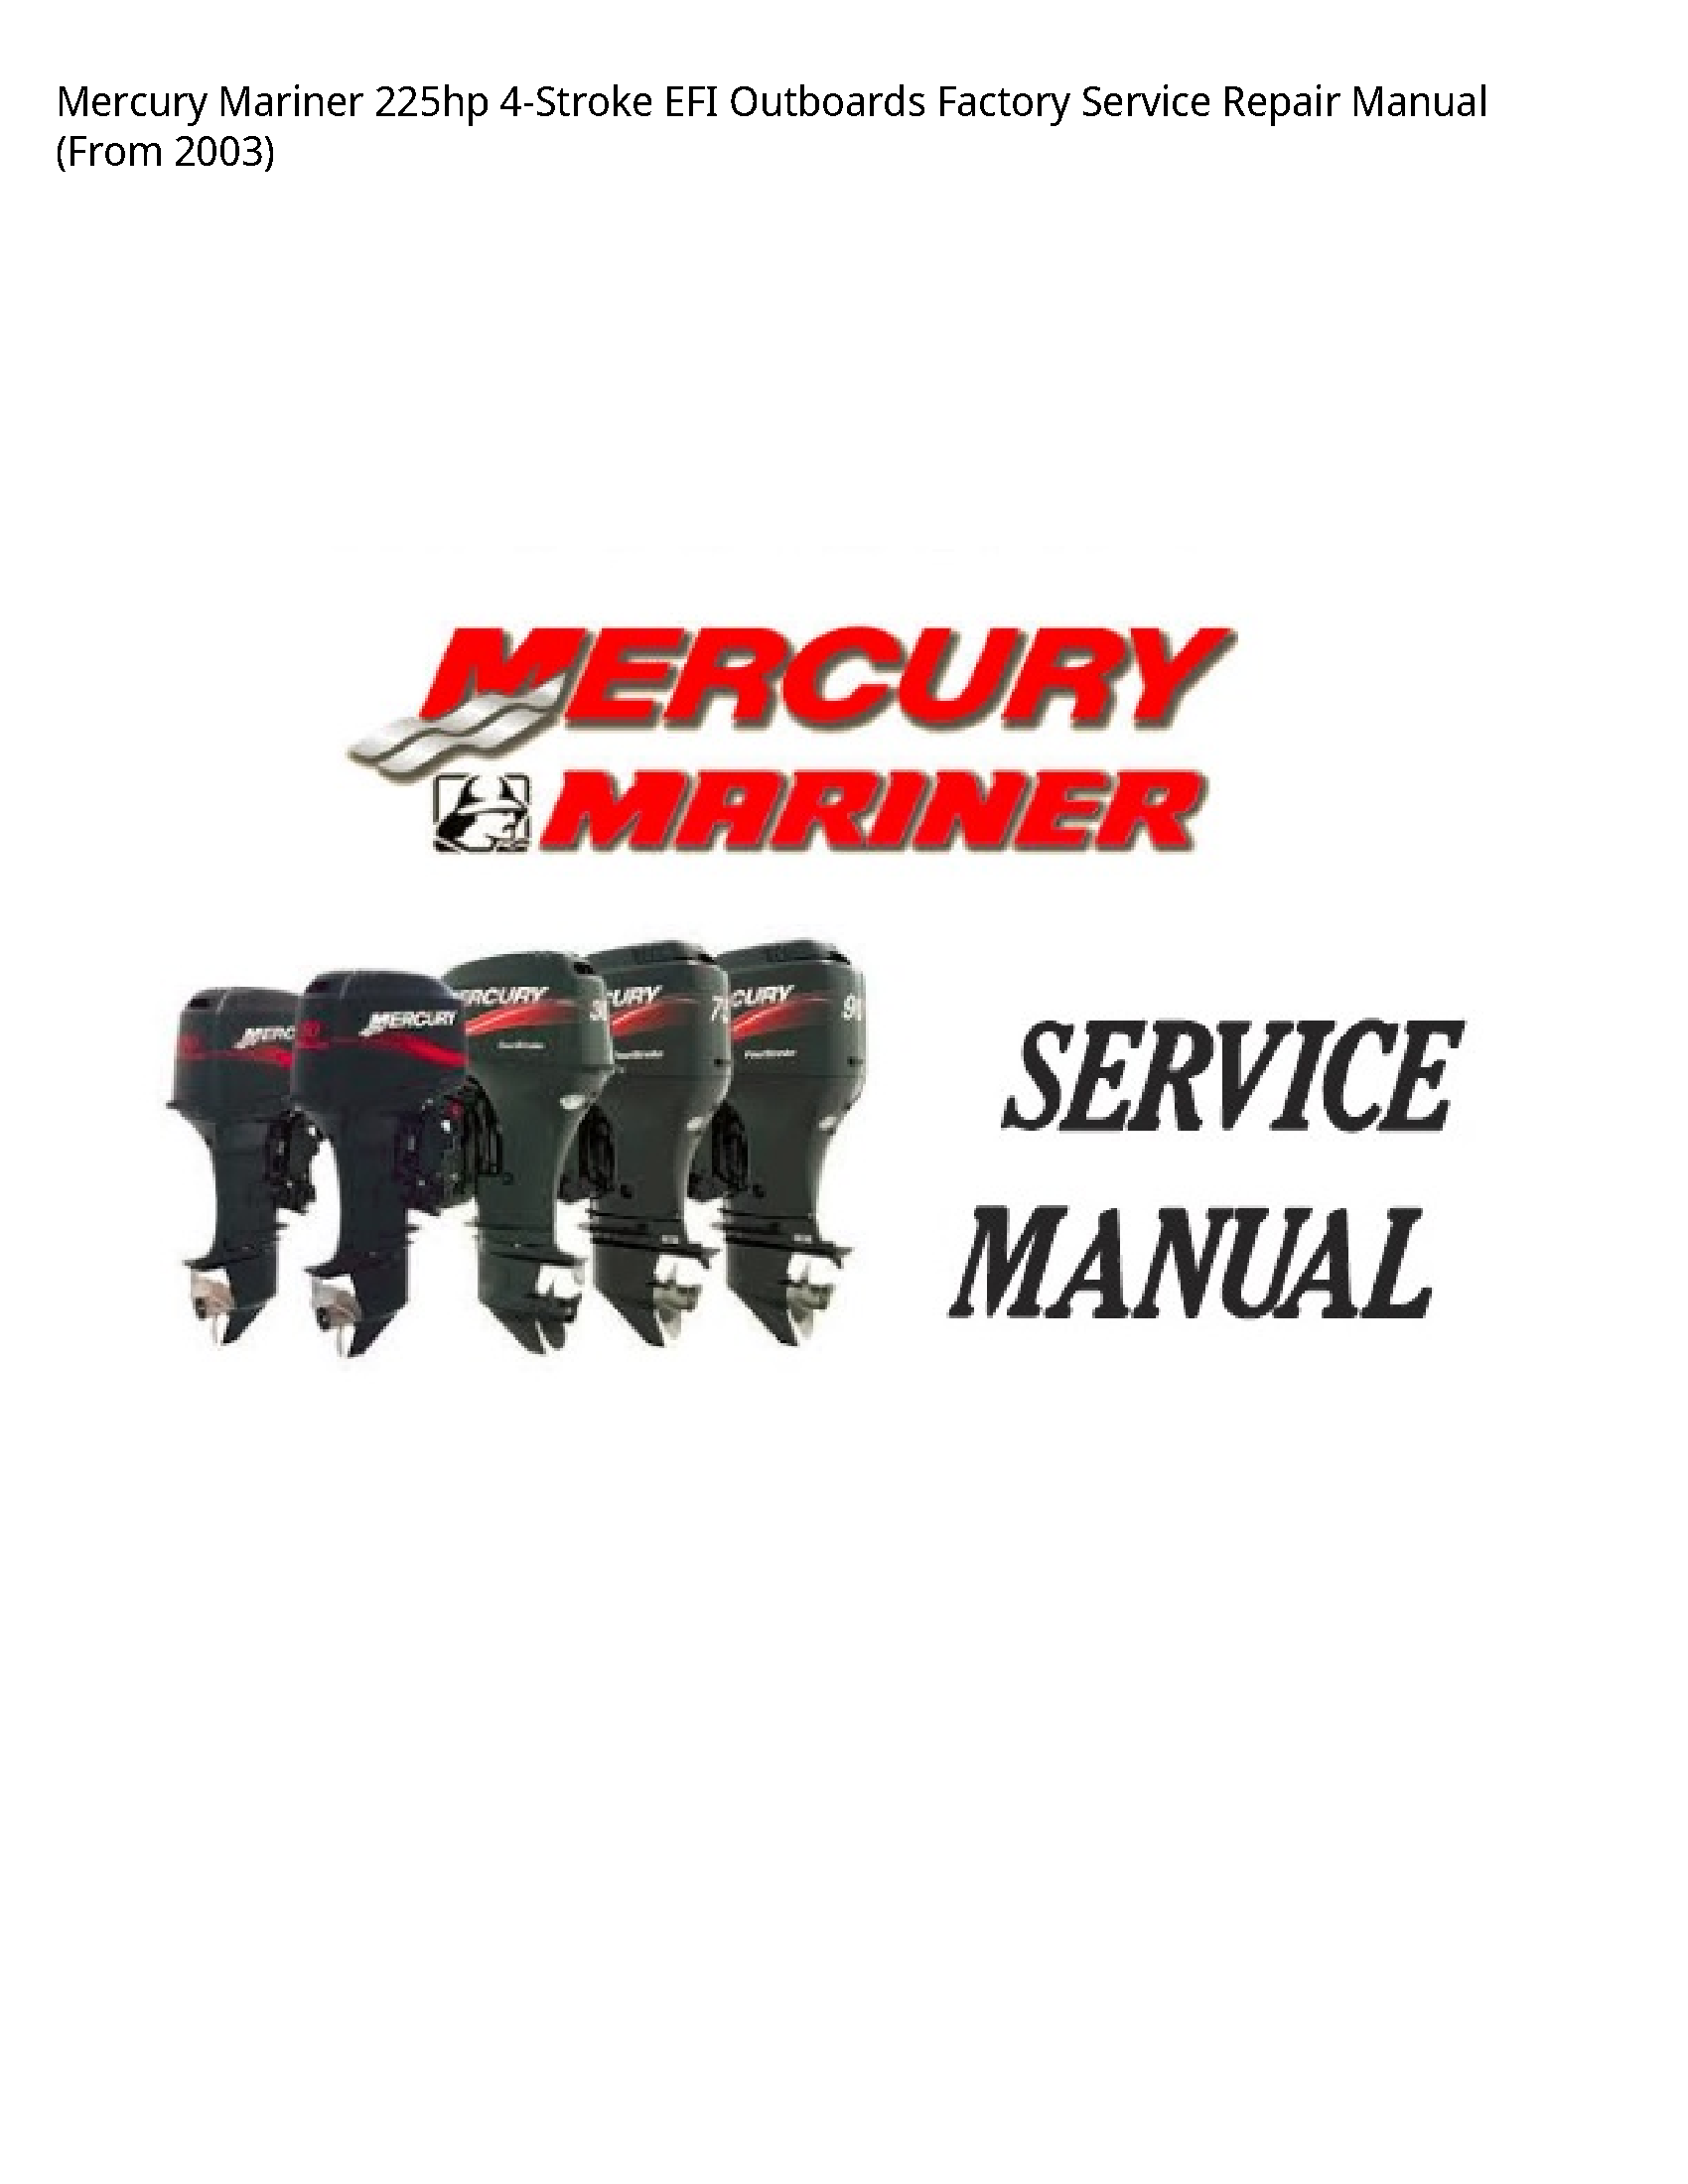 Mercury Mariner 225hp EFI Outboards Factory manual